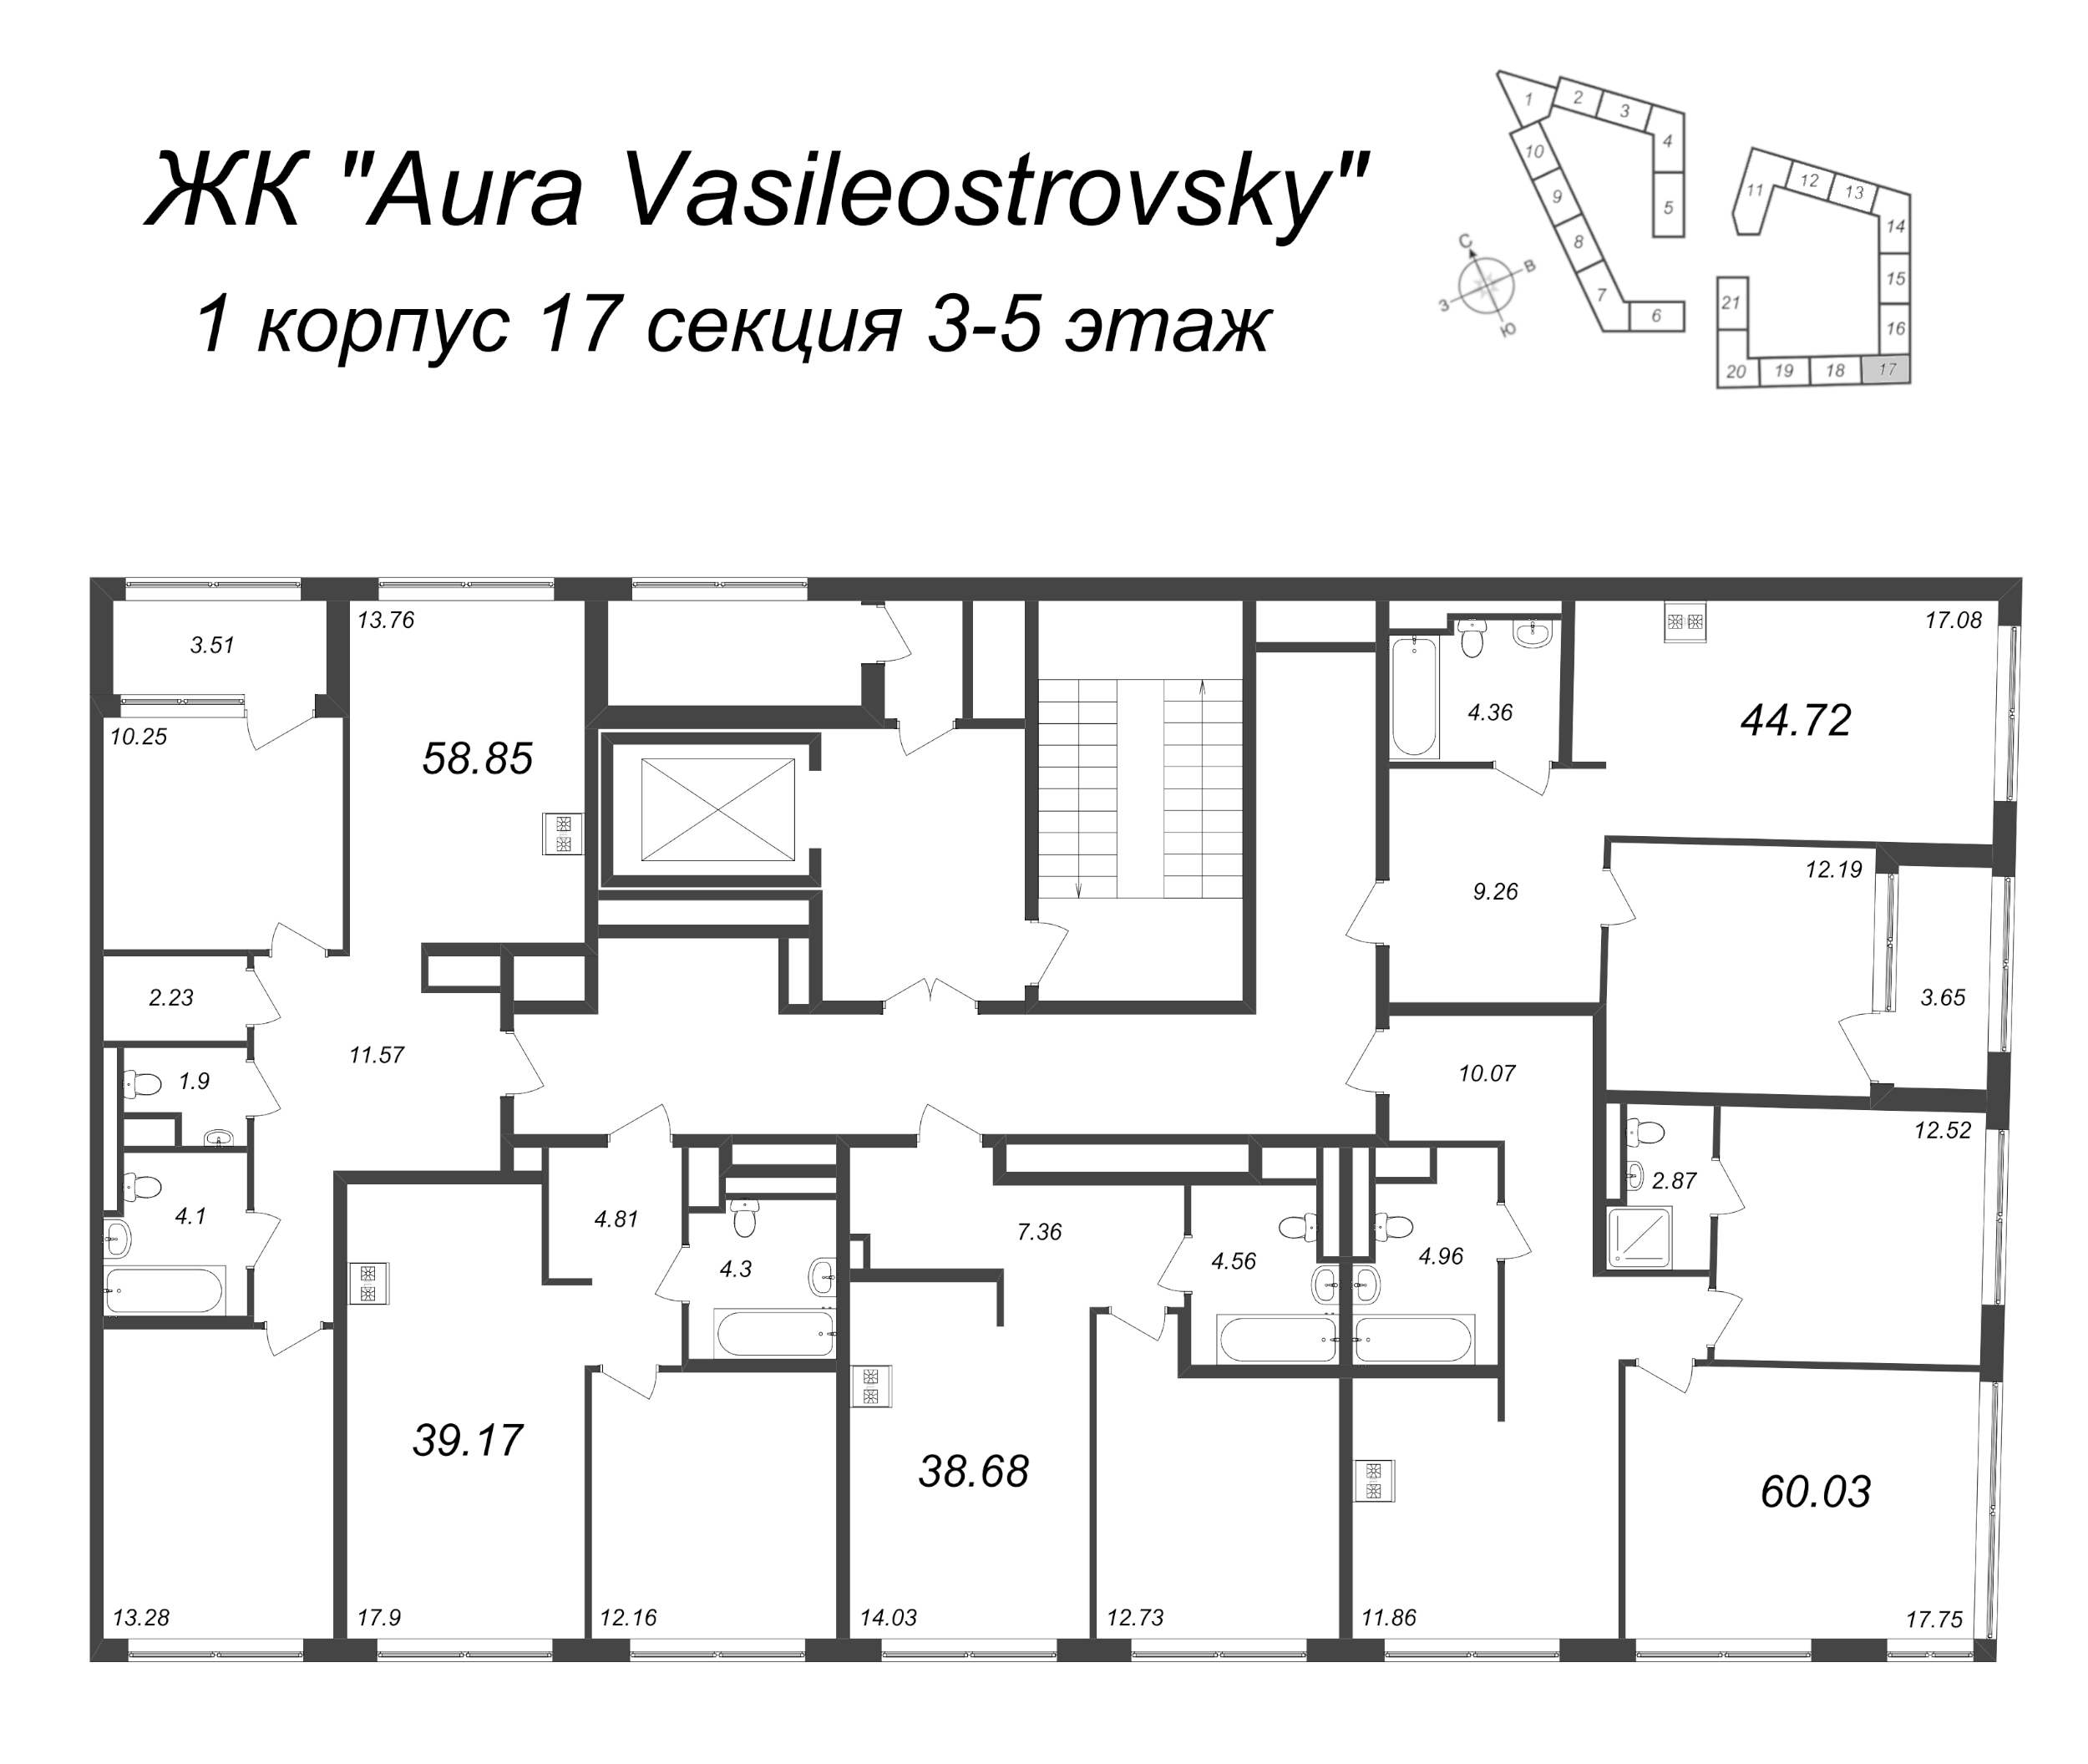 2-комнатная (Евро) квартира, 44.72 м² - планировка этажа